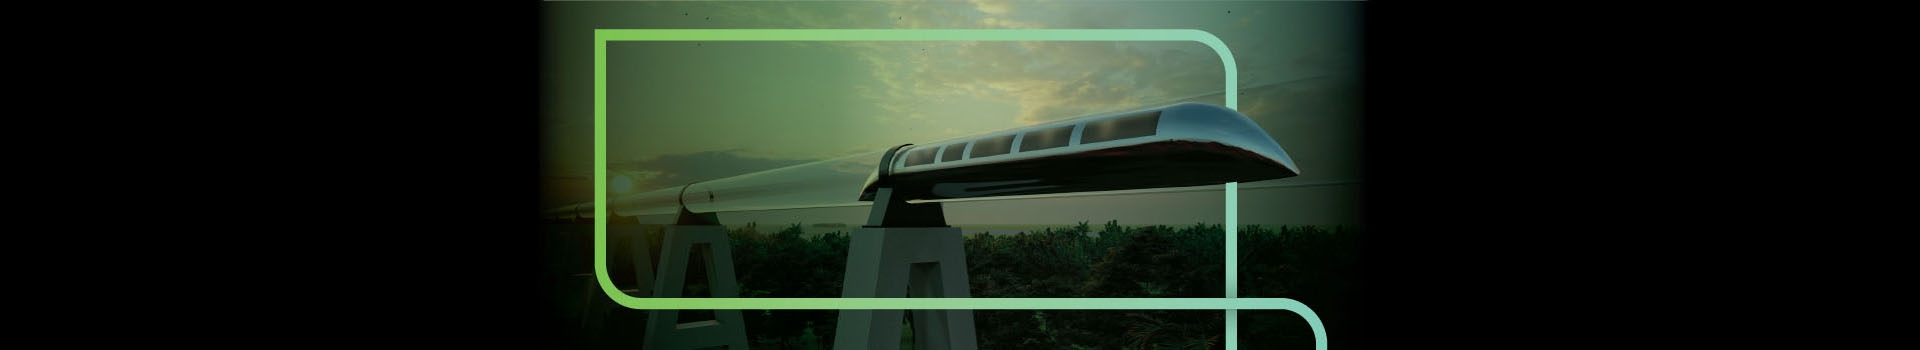 Hyperloop Brasil Rio Grande do Sul  sistema por capsulas